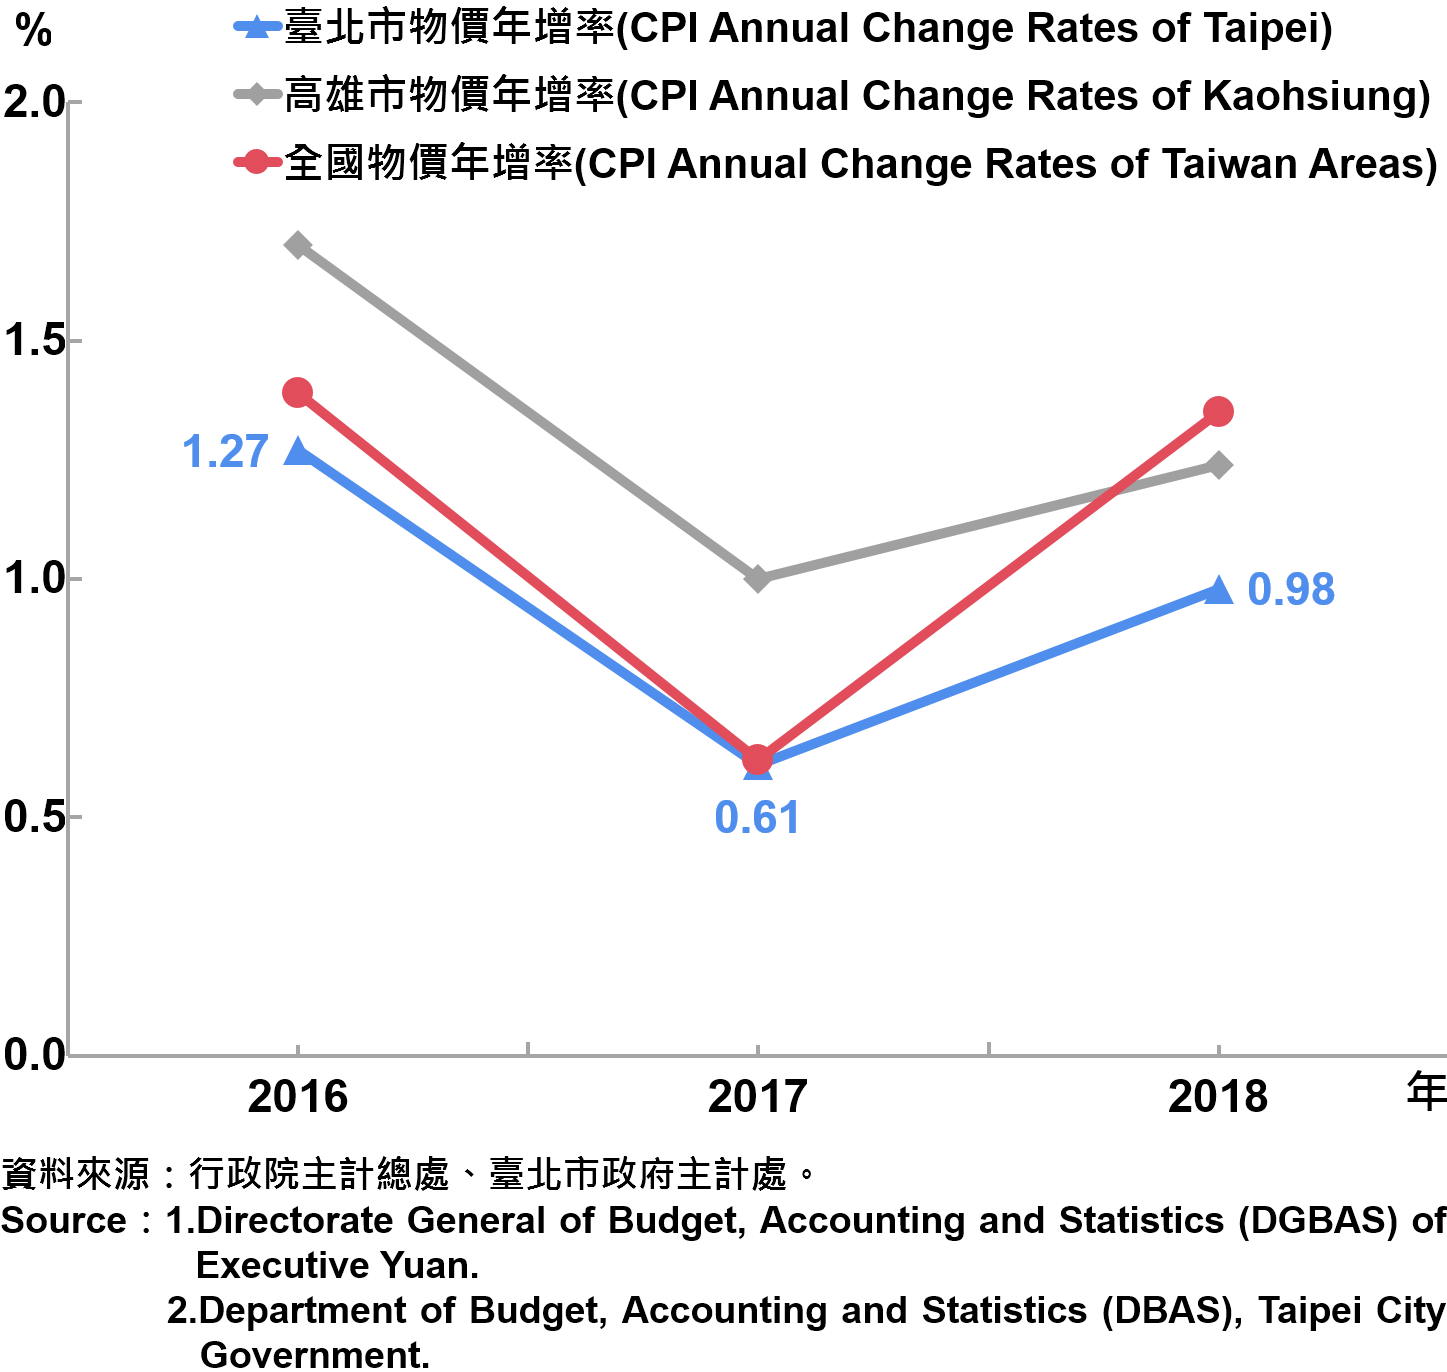 臺北市消費者物價指數（CPI）年增率—2018 The Changes of CPI in Taipei City—2018